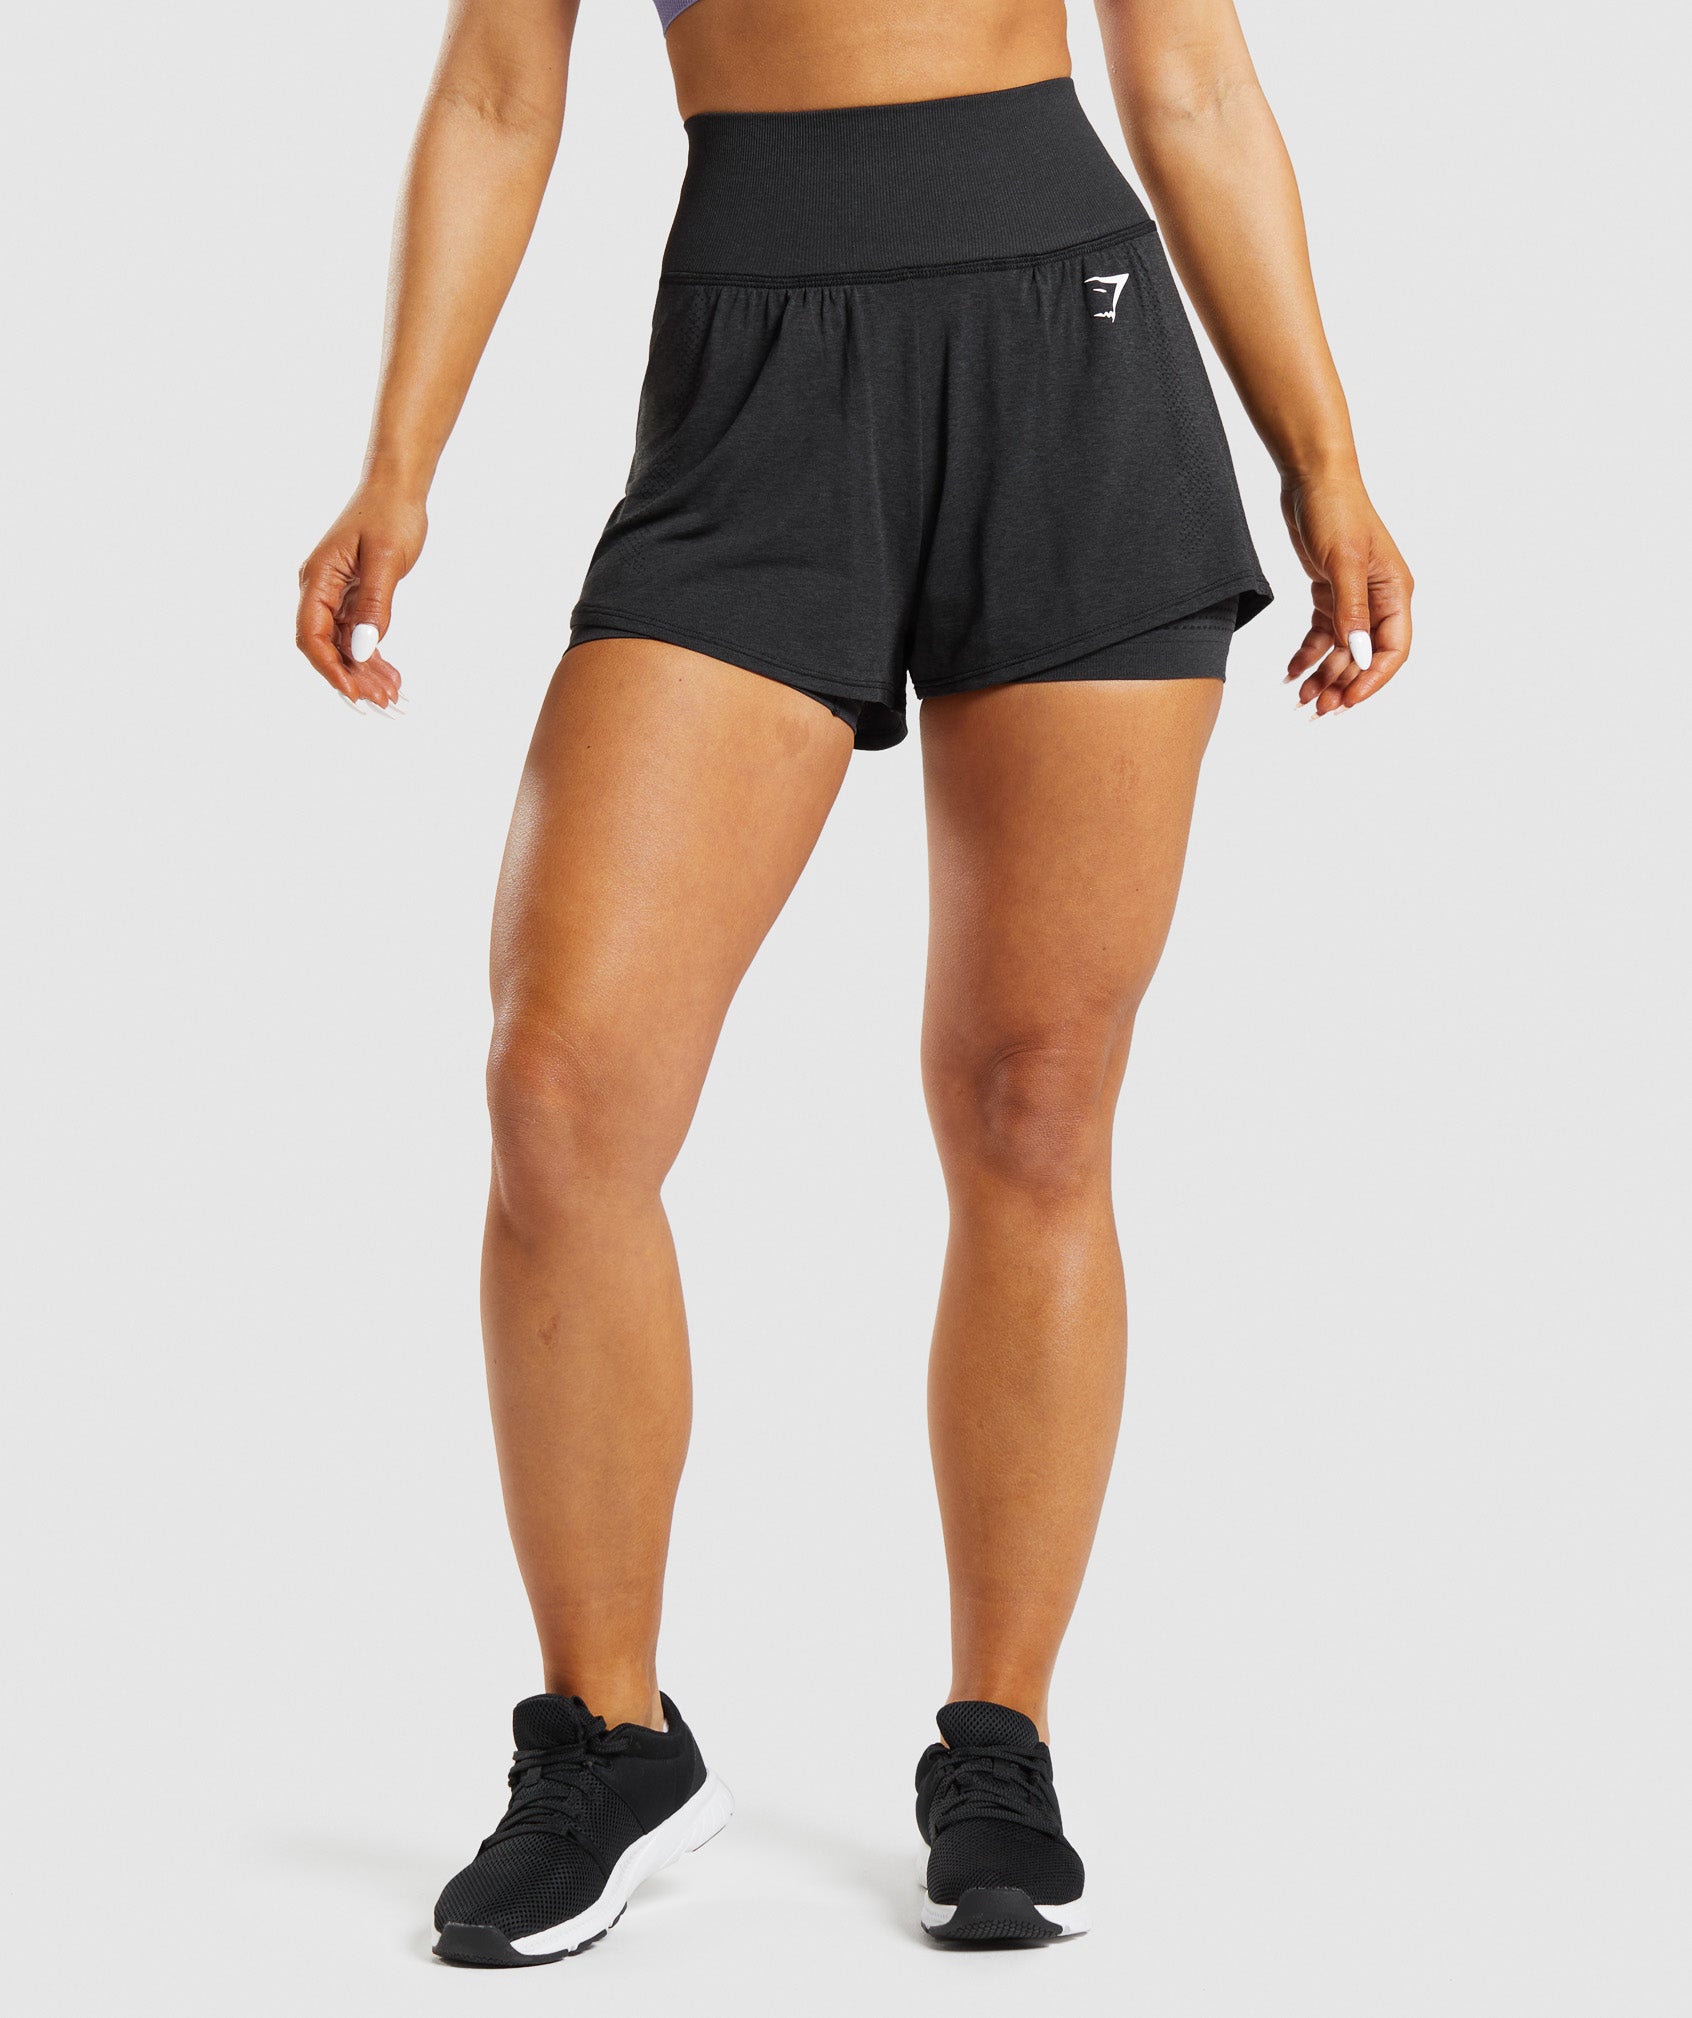 eczipvz Gym Leggings for Women Girls Elastic Waist Straight Leg Paper Bag  Shorts Roll Up Hem Shorts Navy,XL